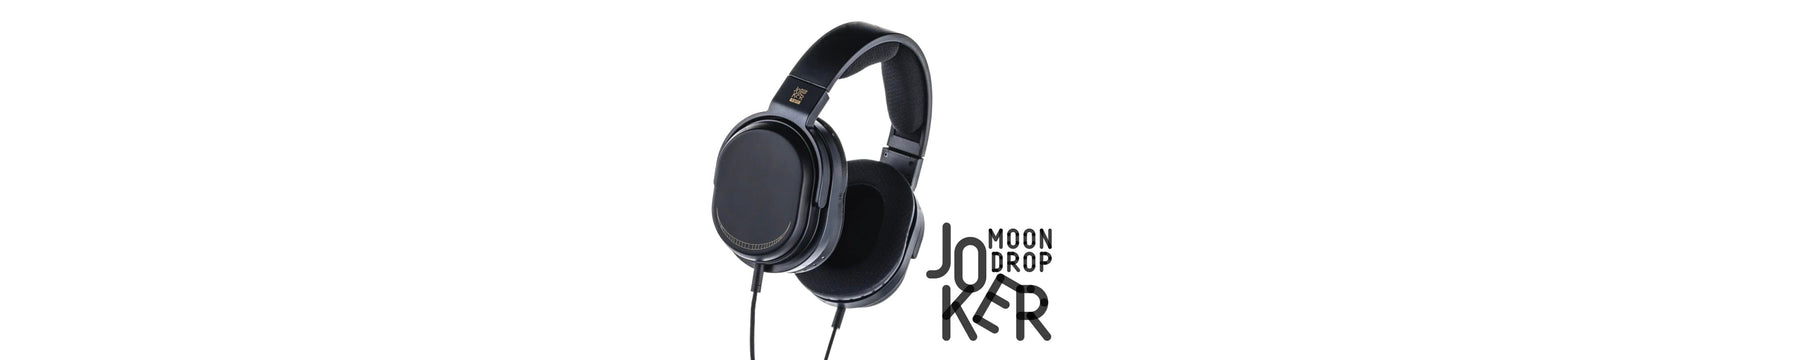 Moondrop Joker Full-Sized Closed Back Studio Monitoring Headphones